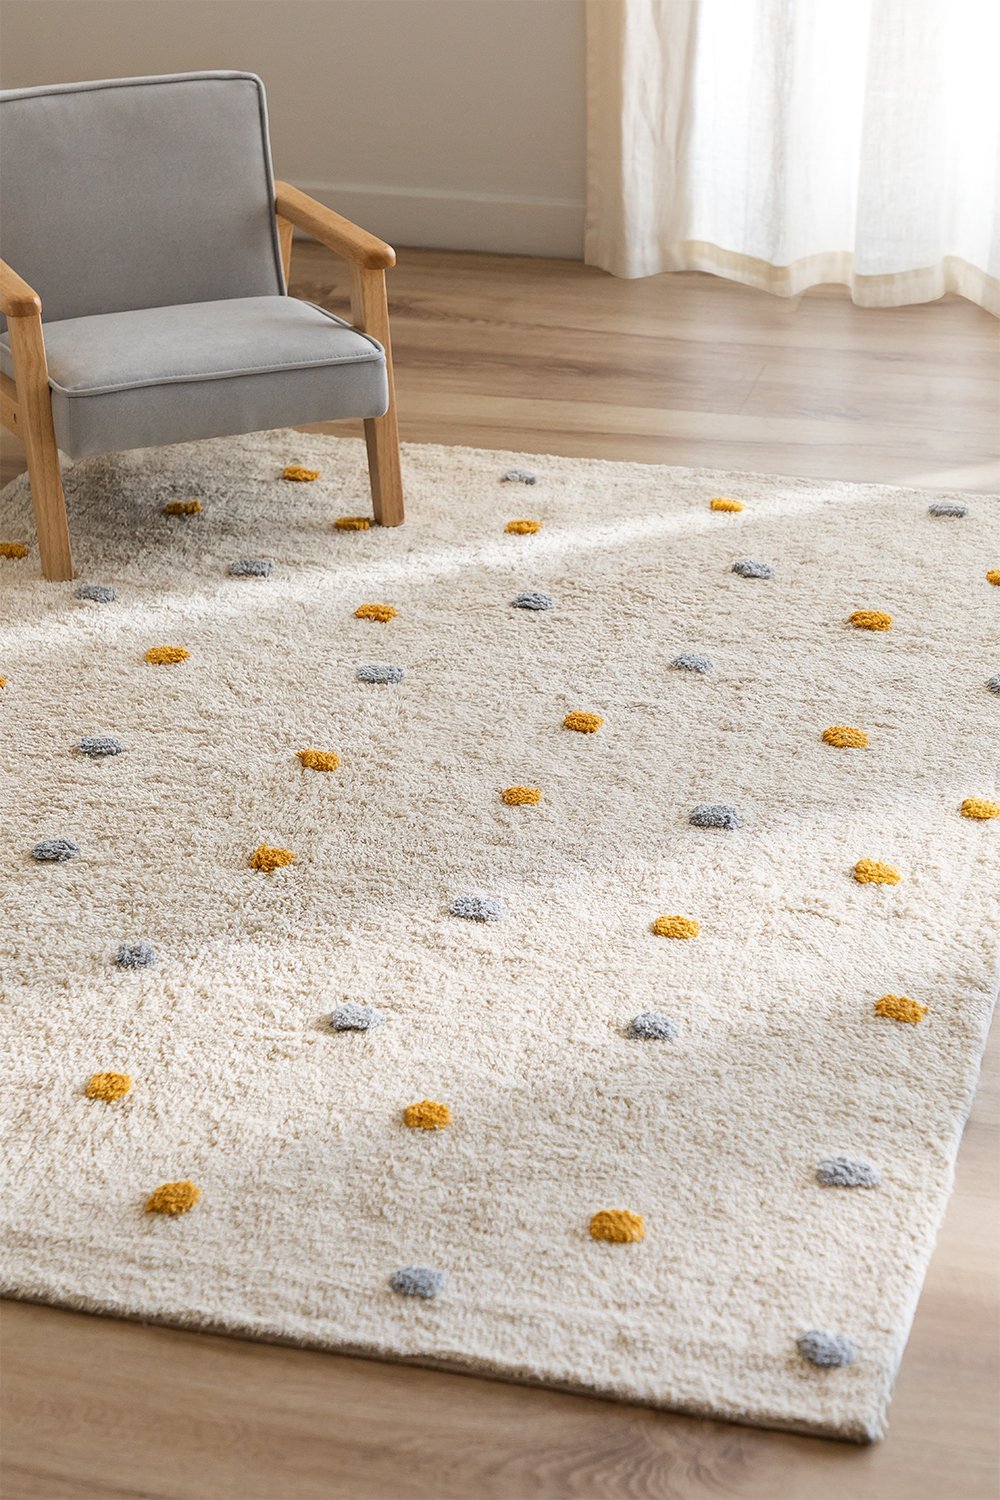 10 alfombras infantiles para jugar